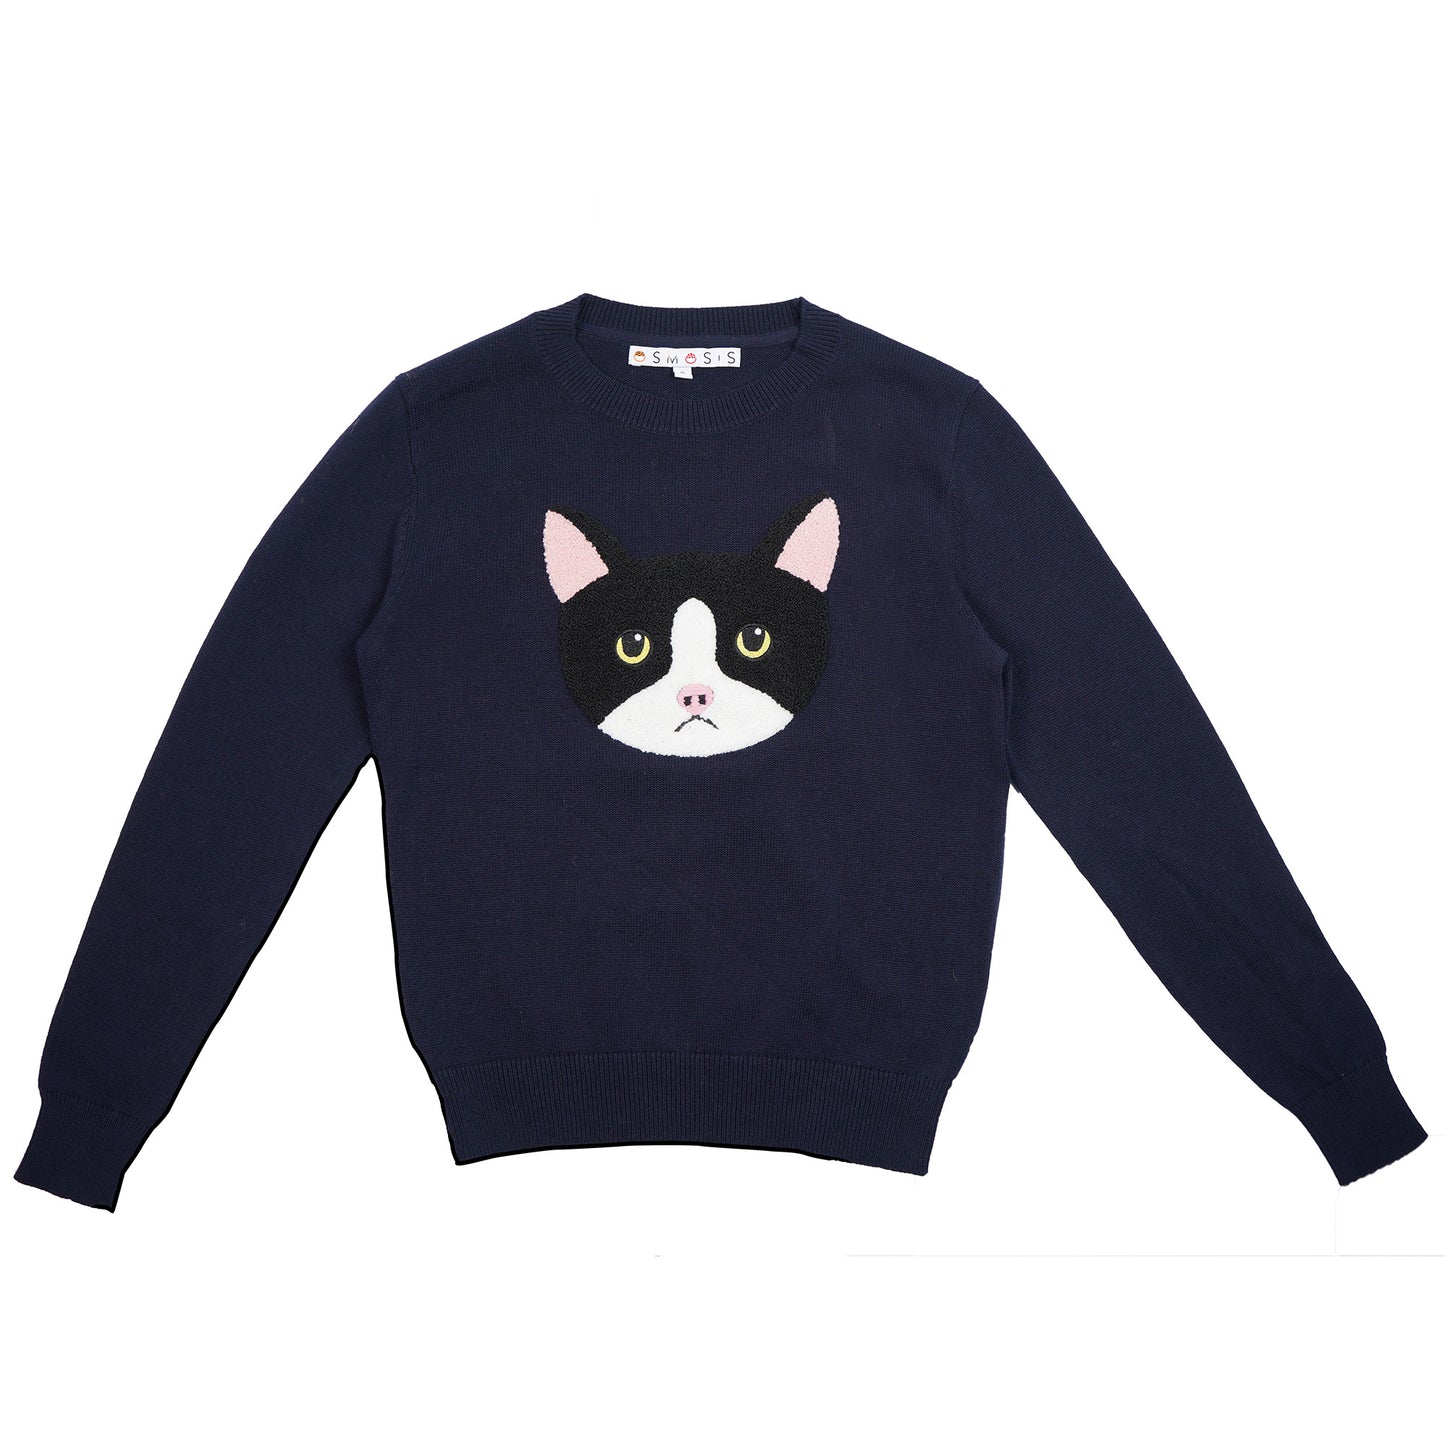 Felix cotton sweater